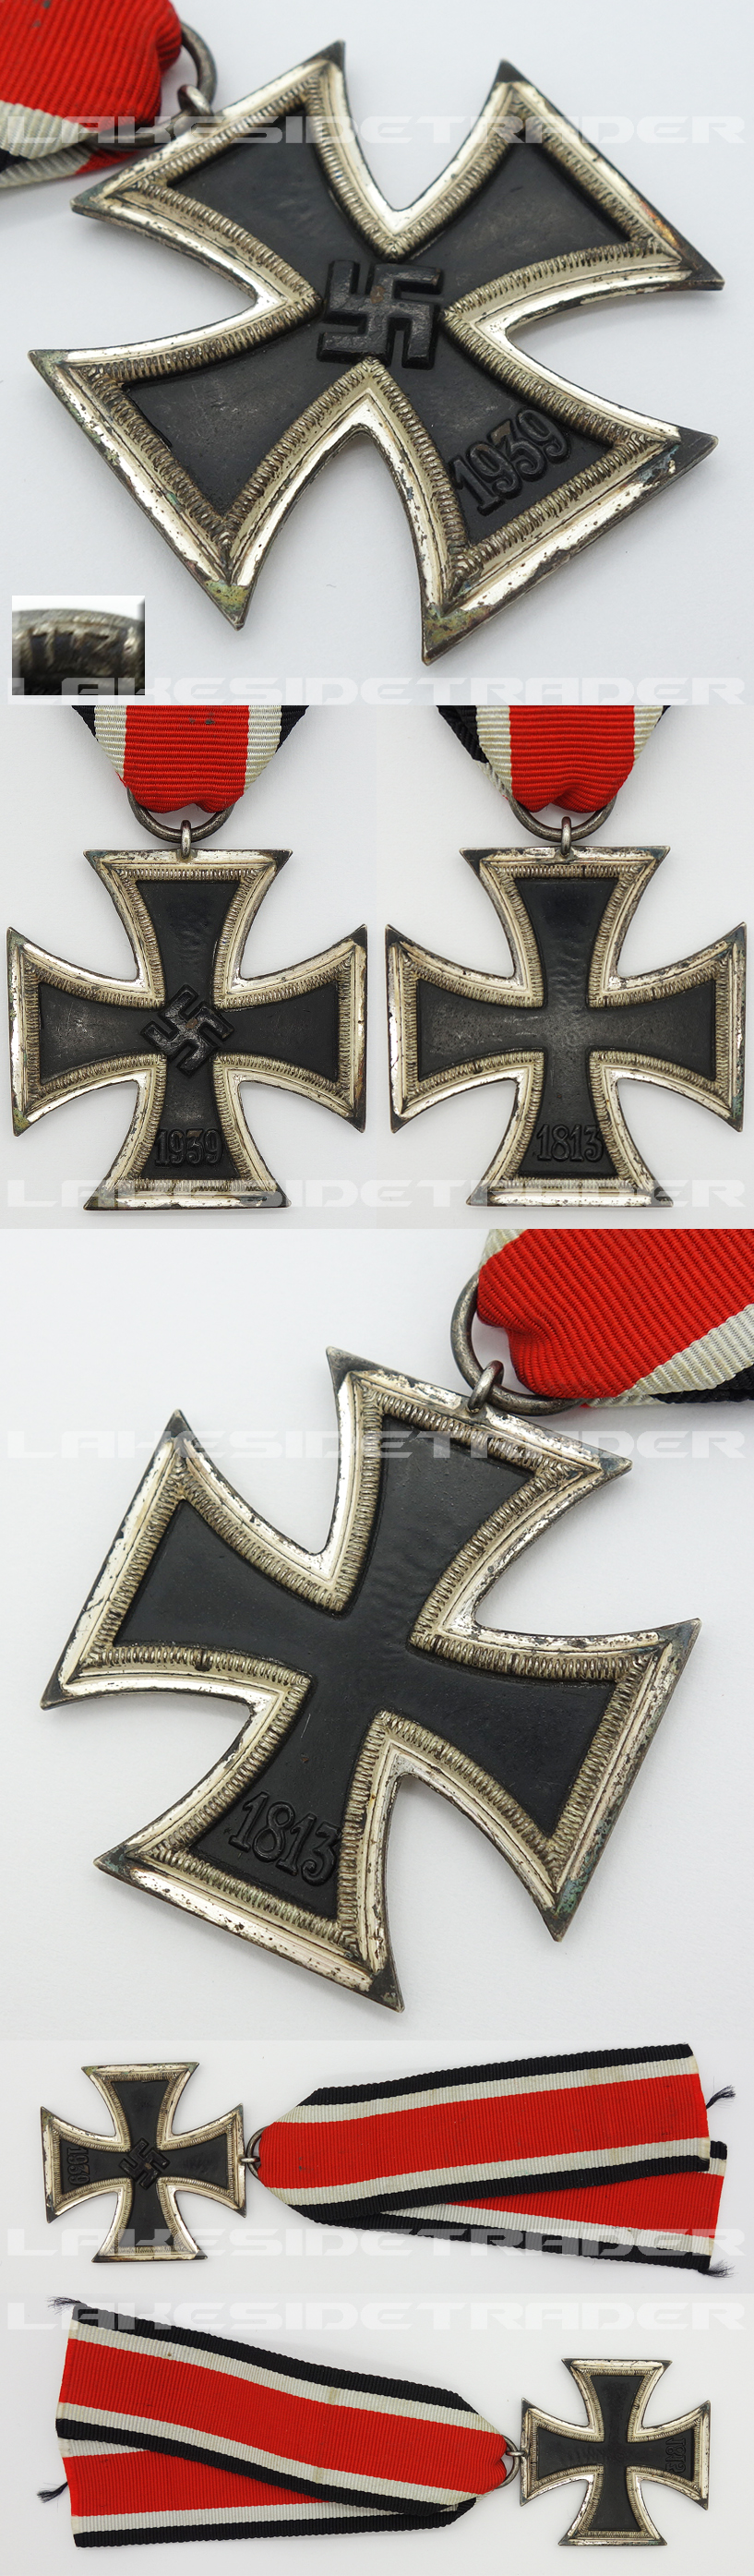 2nd Class Iron Cross by 113